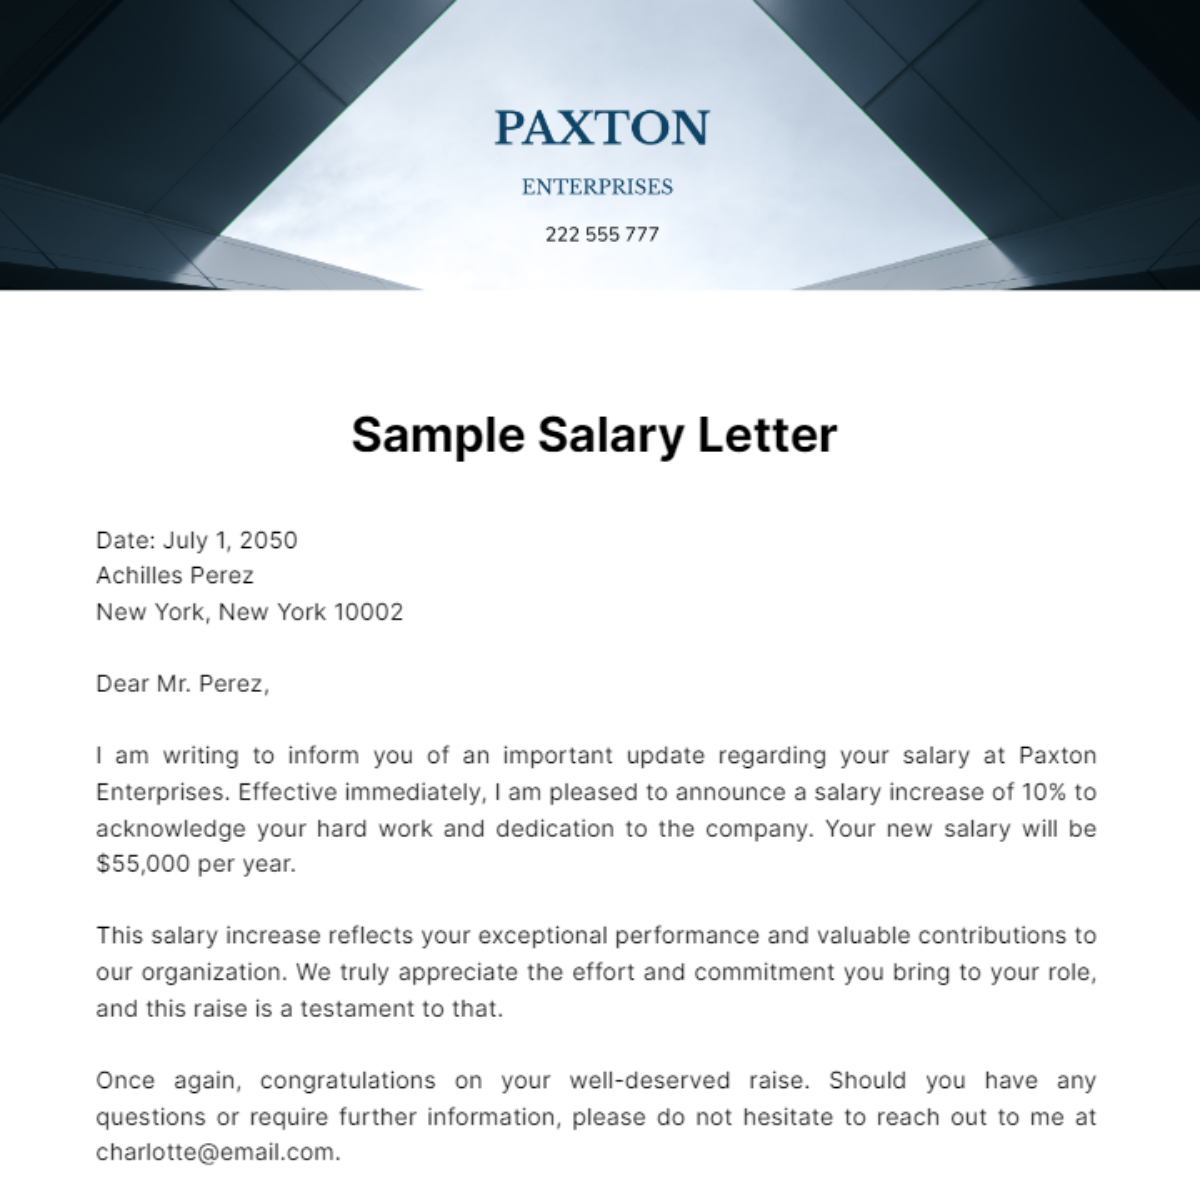 Sample Salary Letter Template